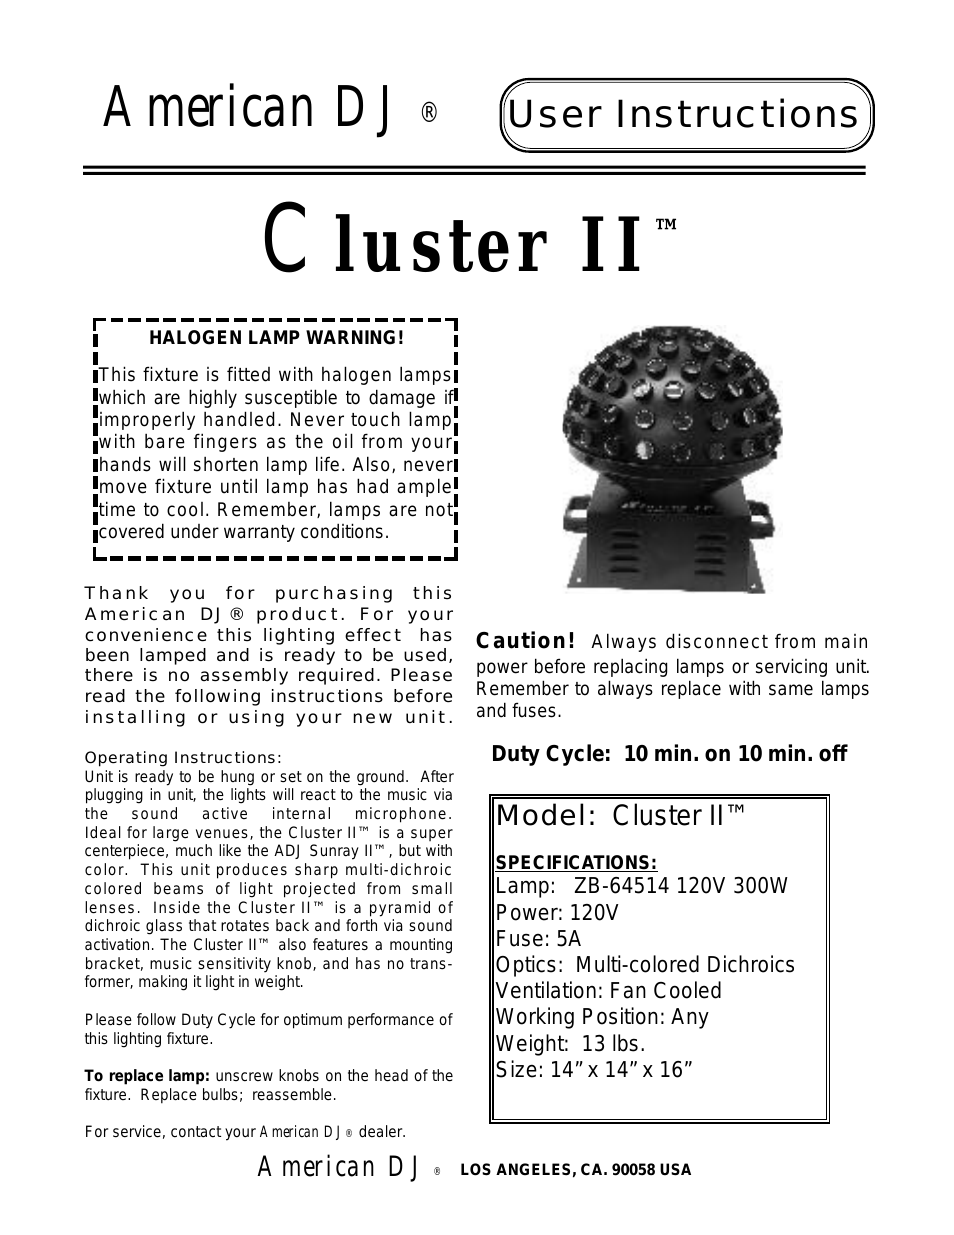 Cluster II